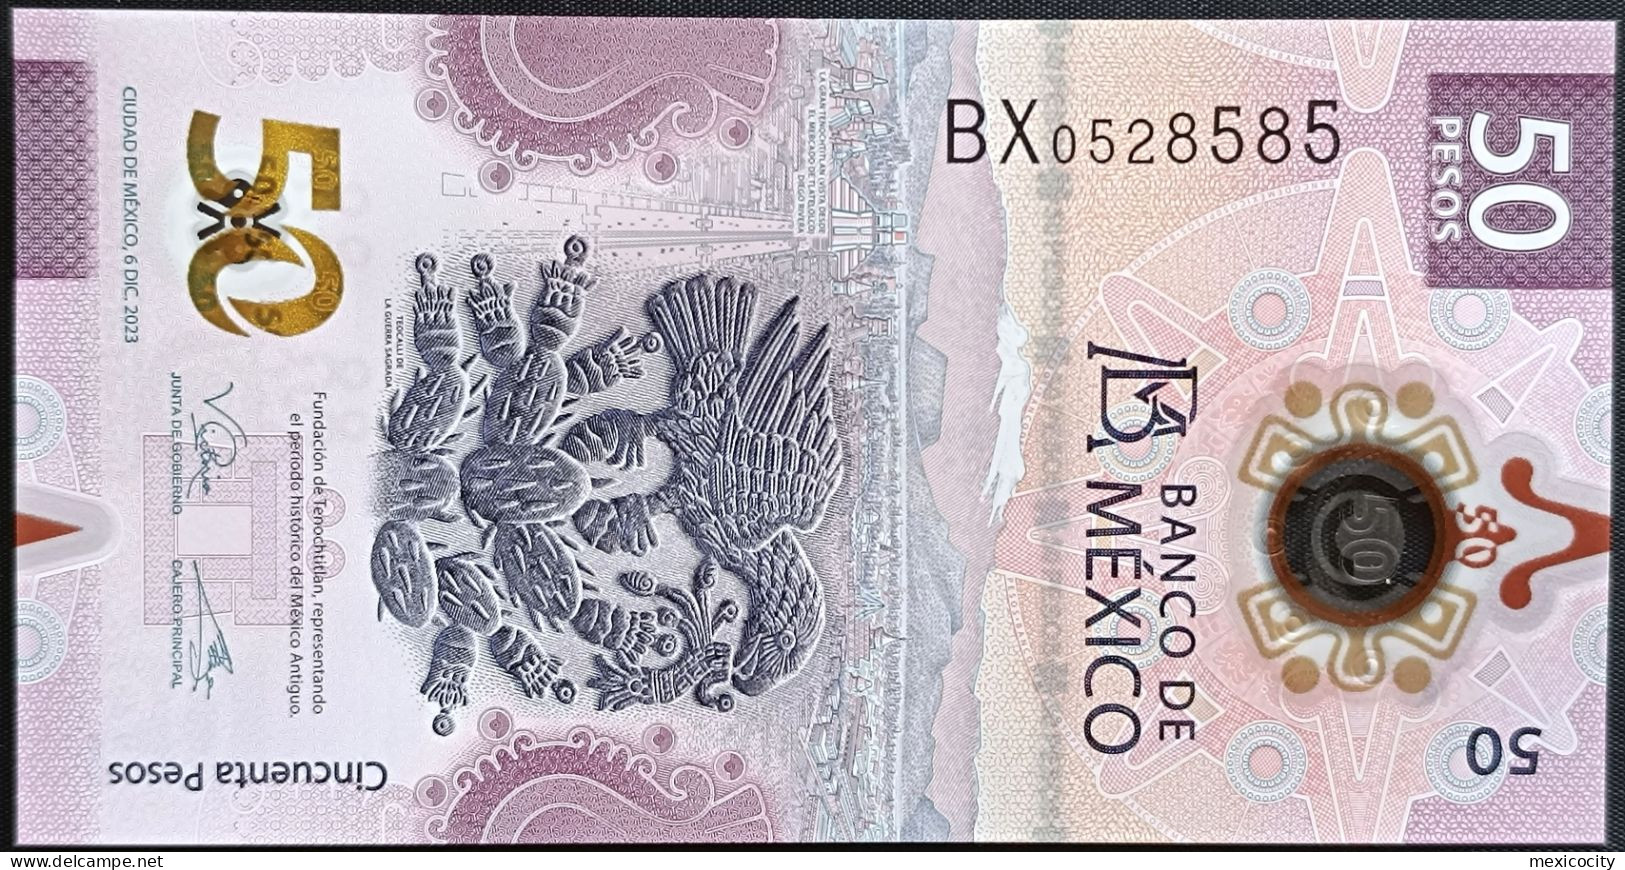 MEXICO $50 ! SERIES BX 6-DEC-2023 DATE ! Victoria Rod. Sign. AXOLOTL POLYMER NOTE Mint BU Crisp Read Descr. For Notes - Mexico